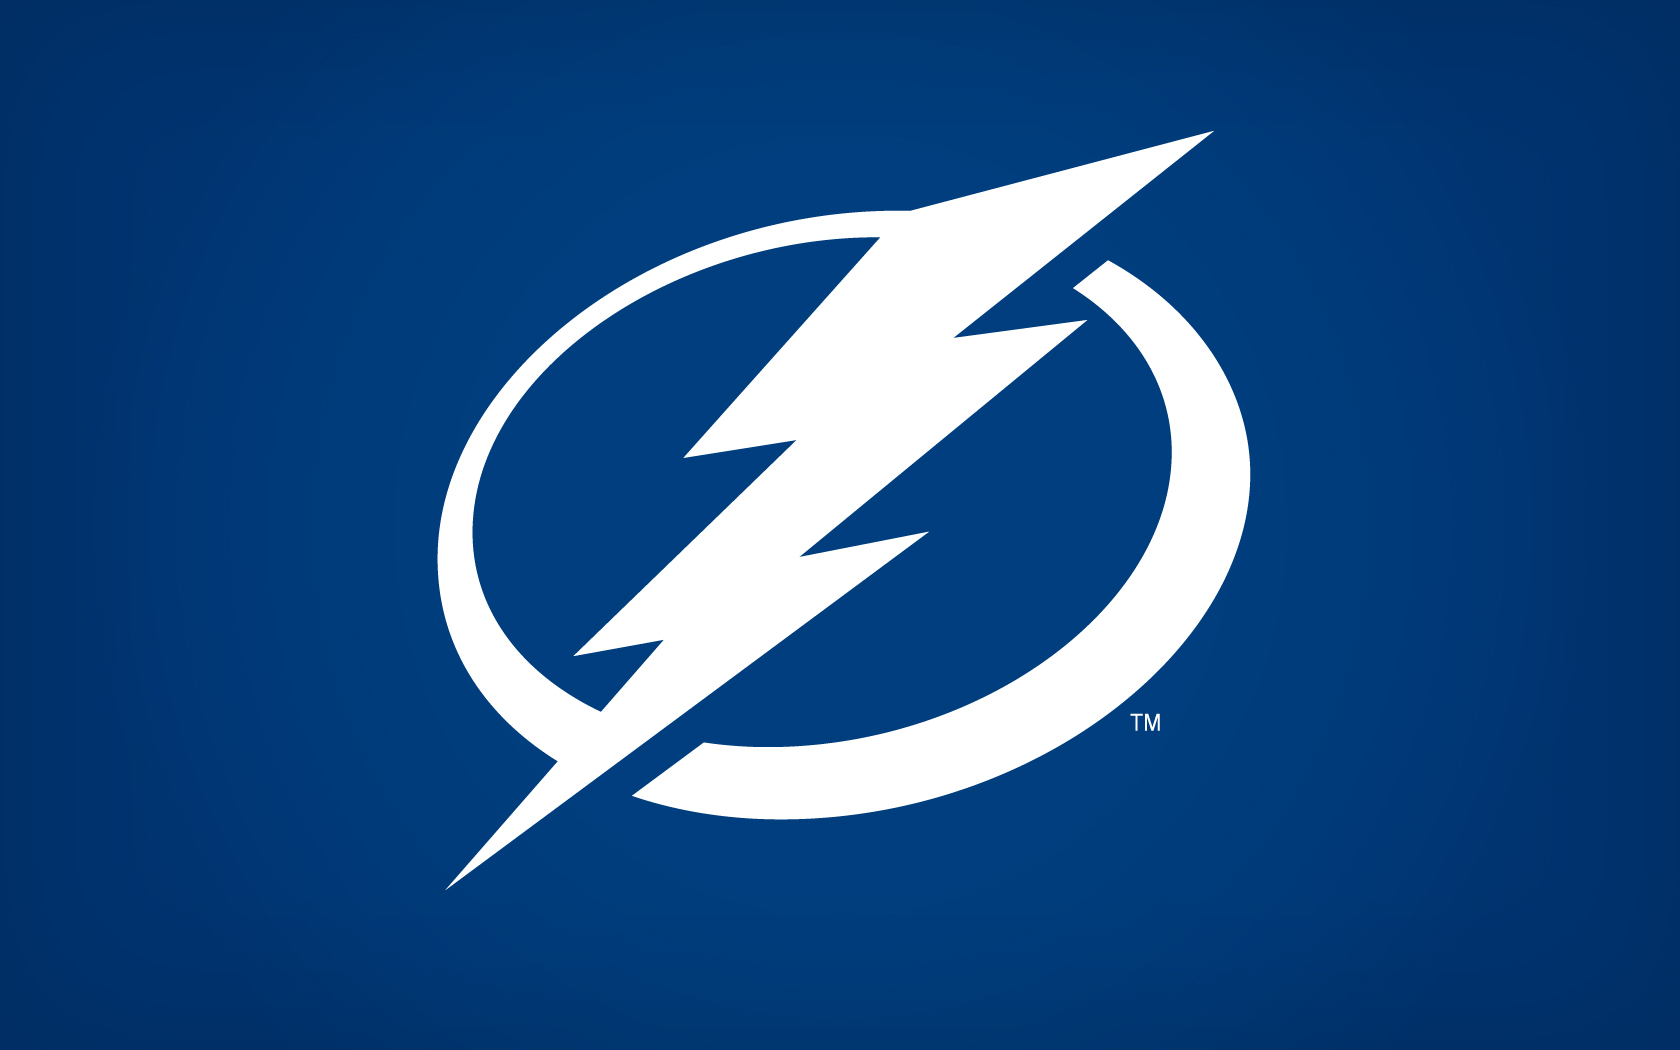 Tampa Bay Lightning Image Tbl Logo Wallpaper HD And